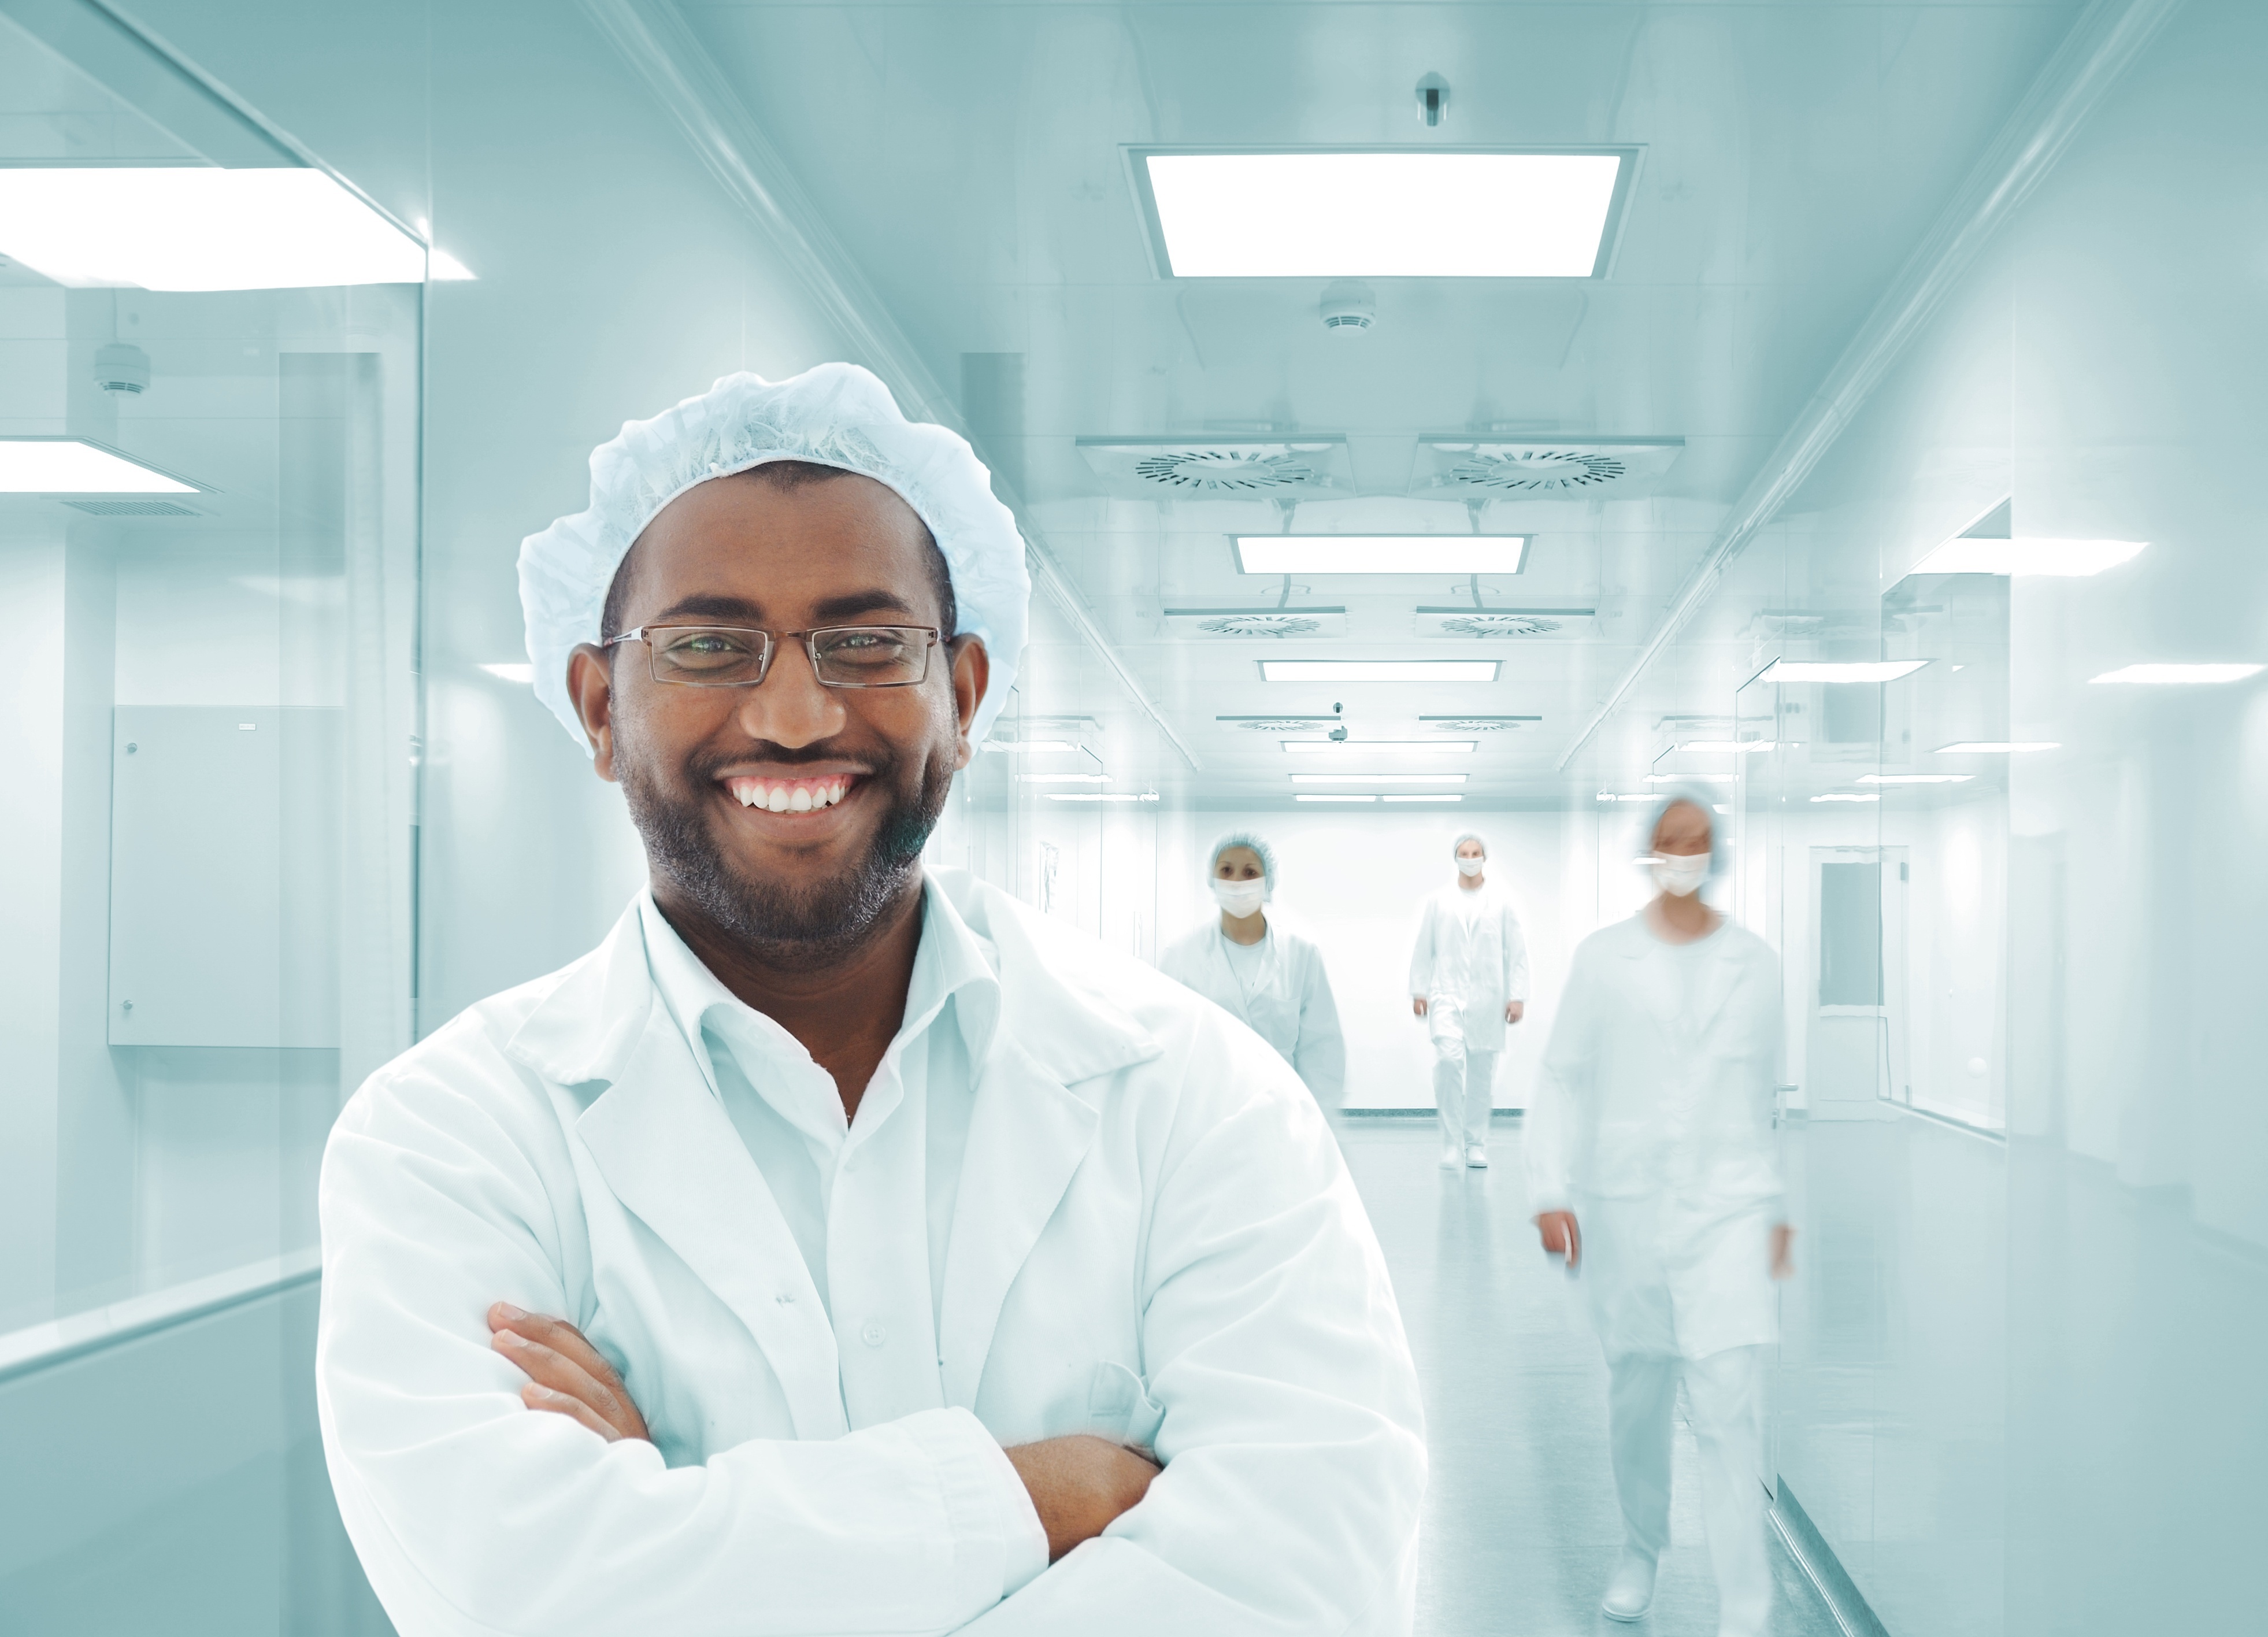 role of occupational medicine doctors